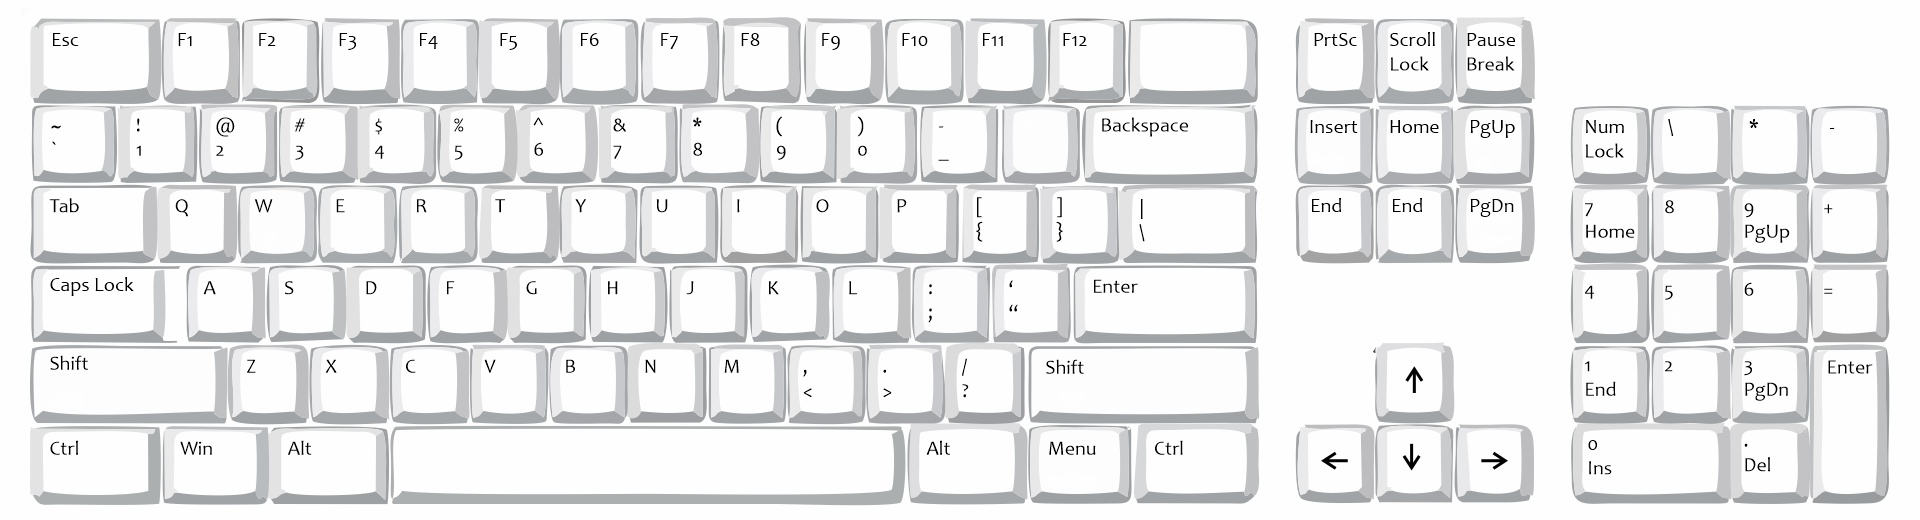 Printable Computer Keyboard Layout Image